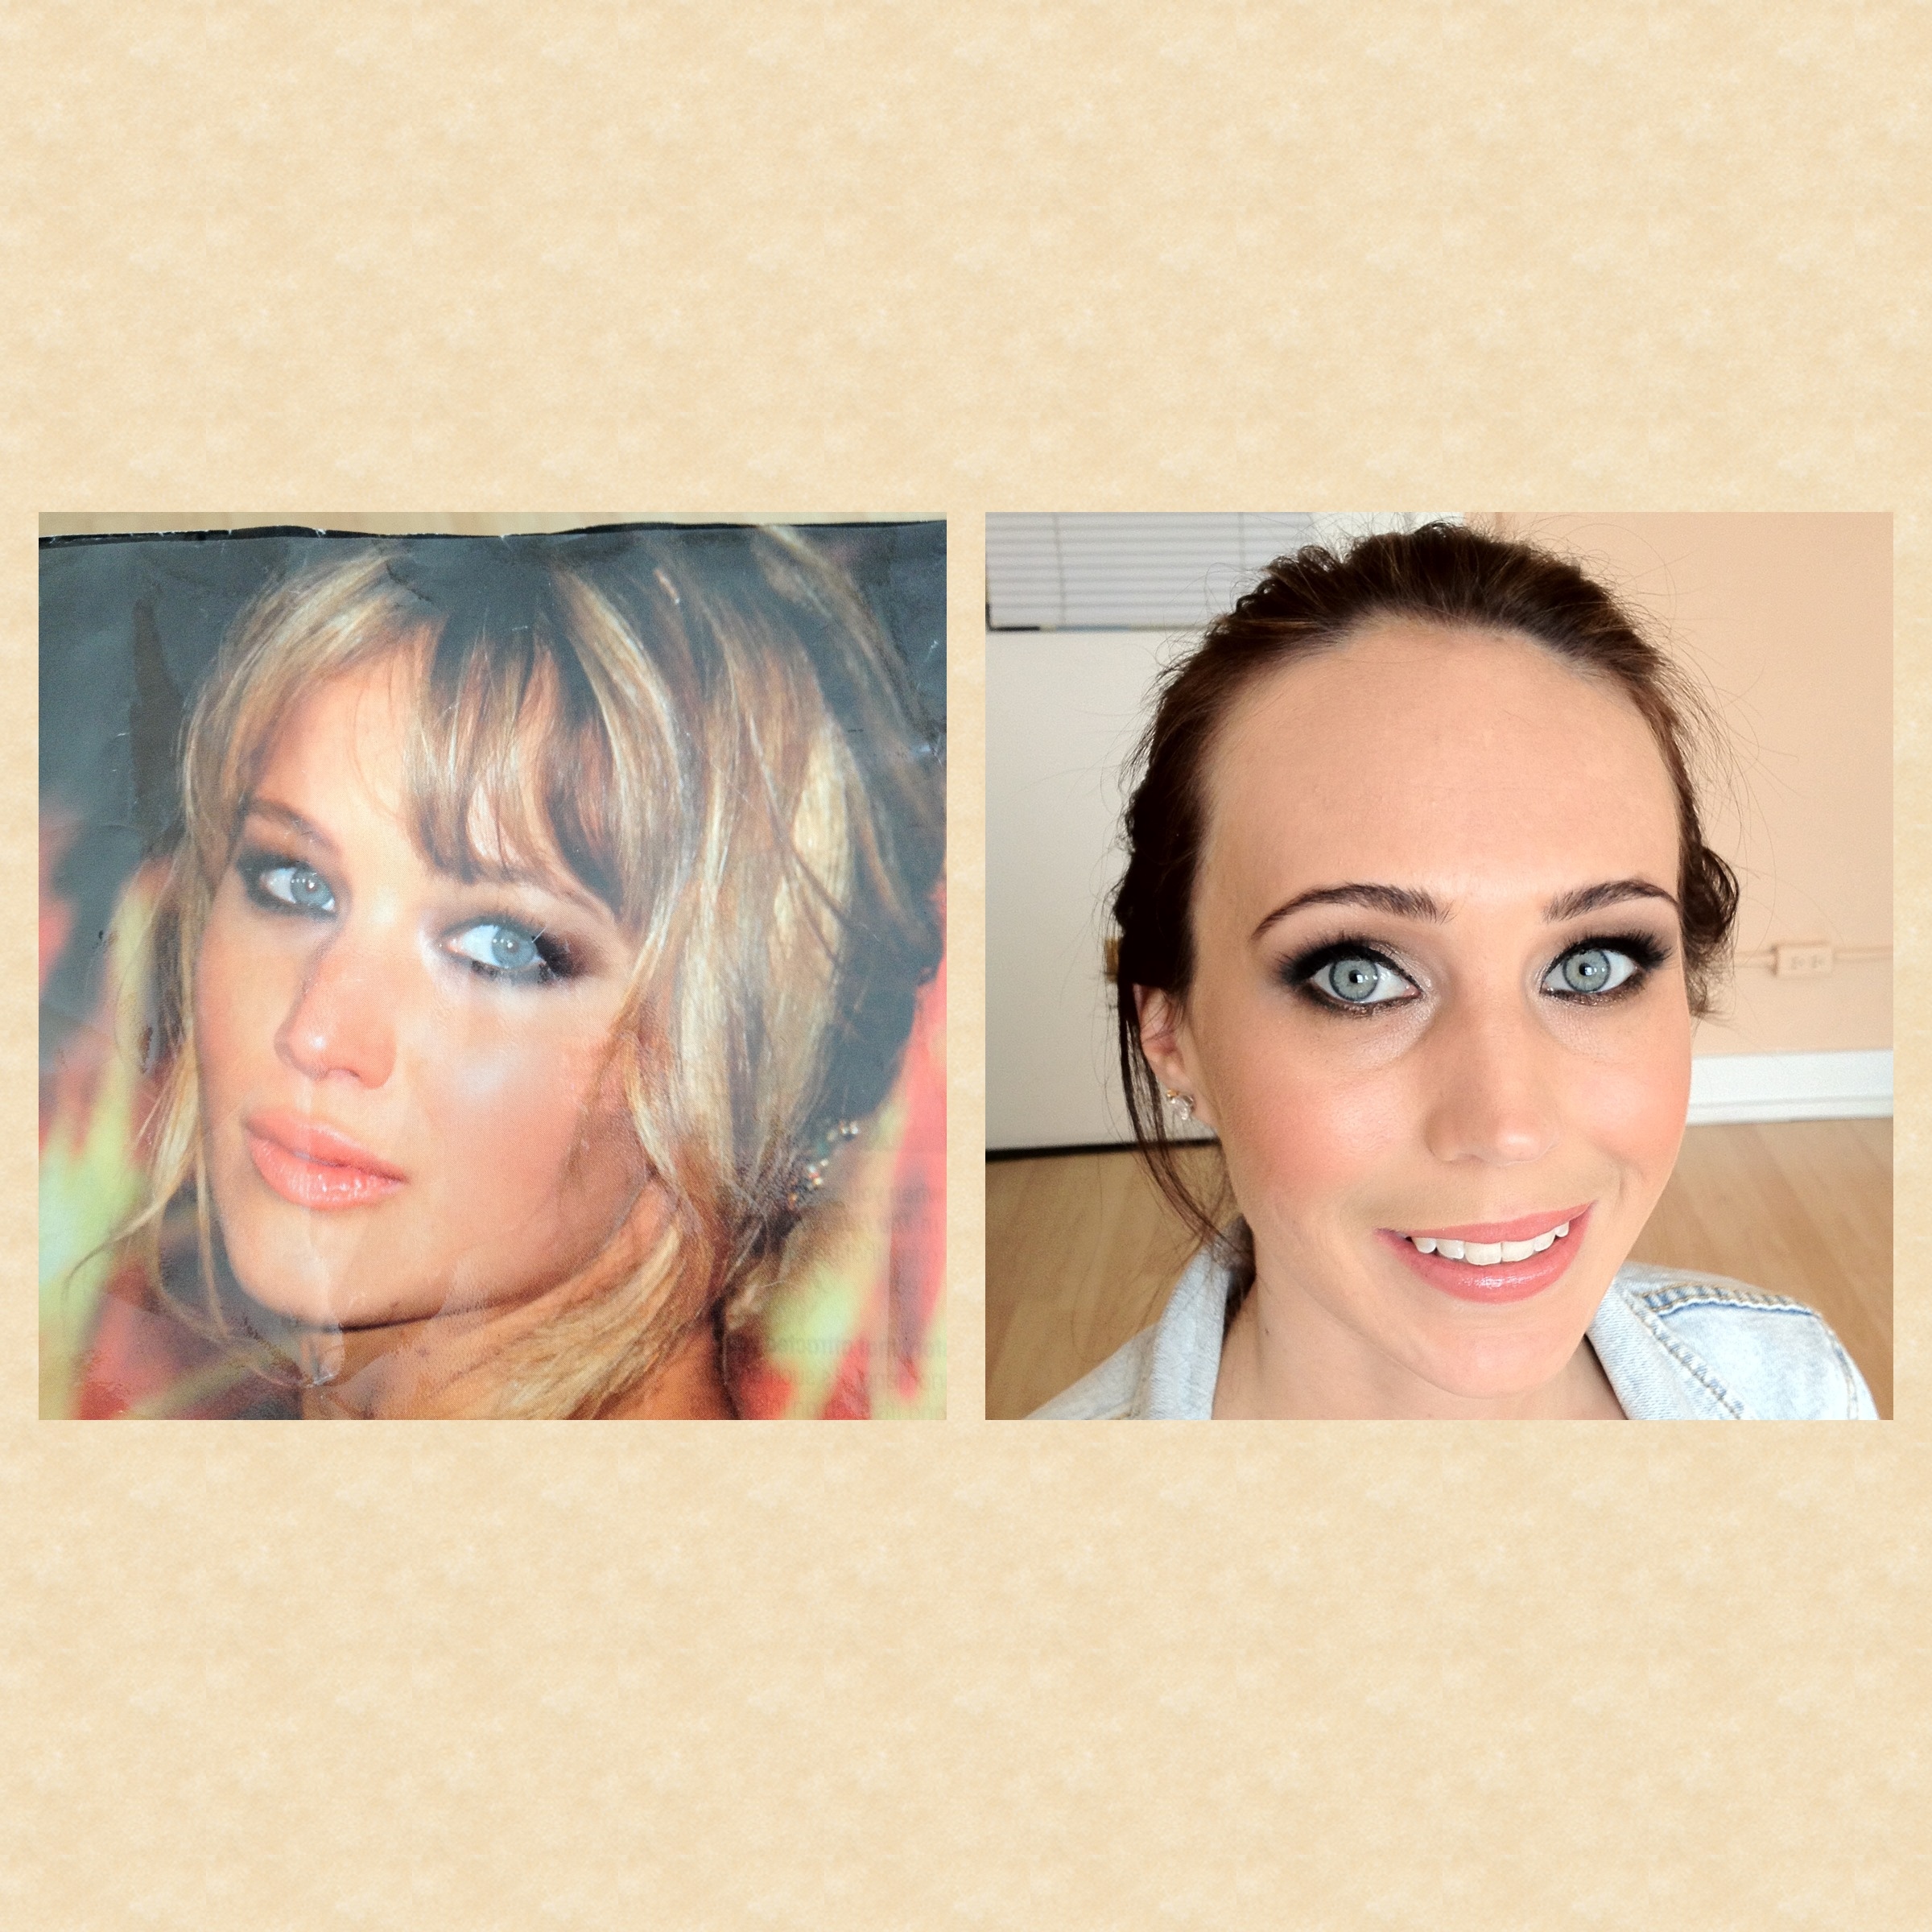 Hunger Games Inspired Make-up